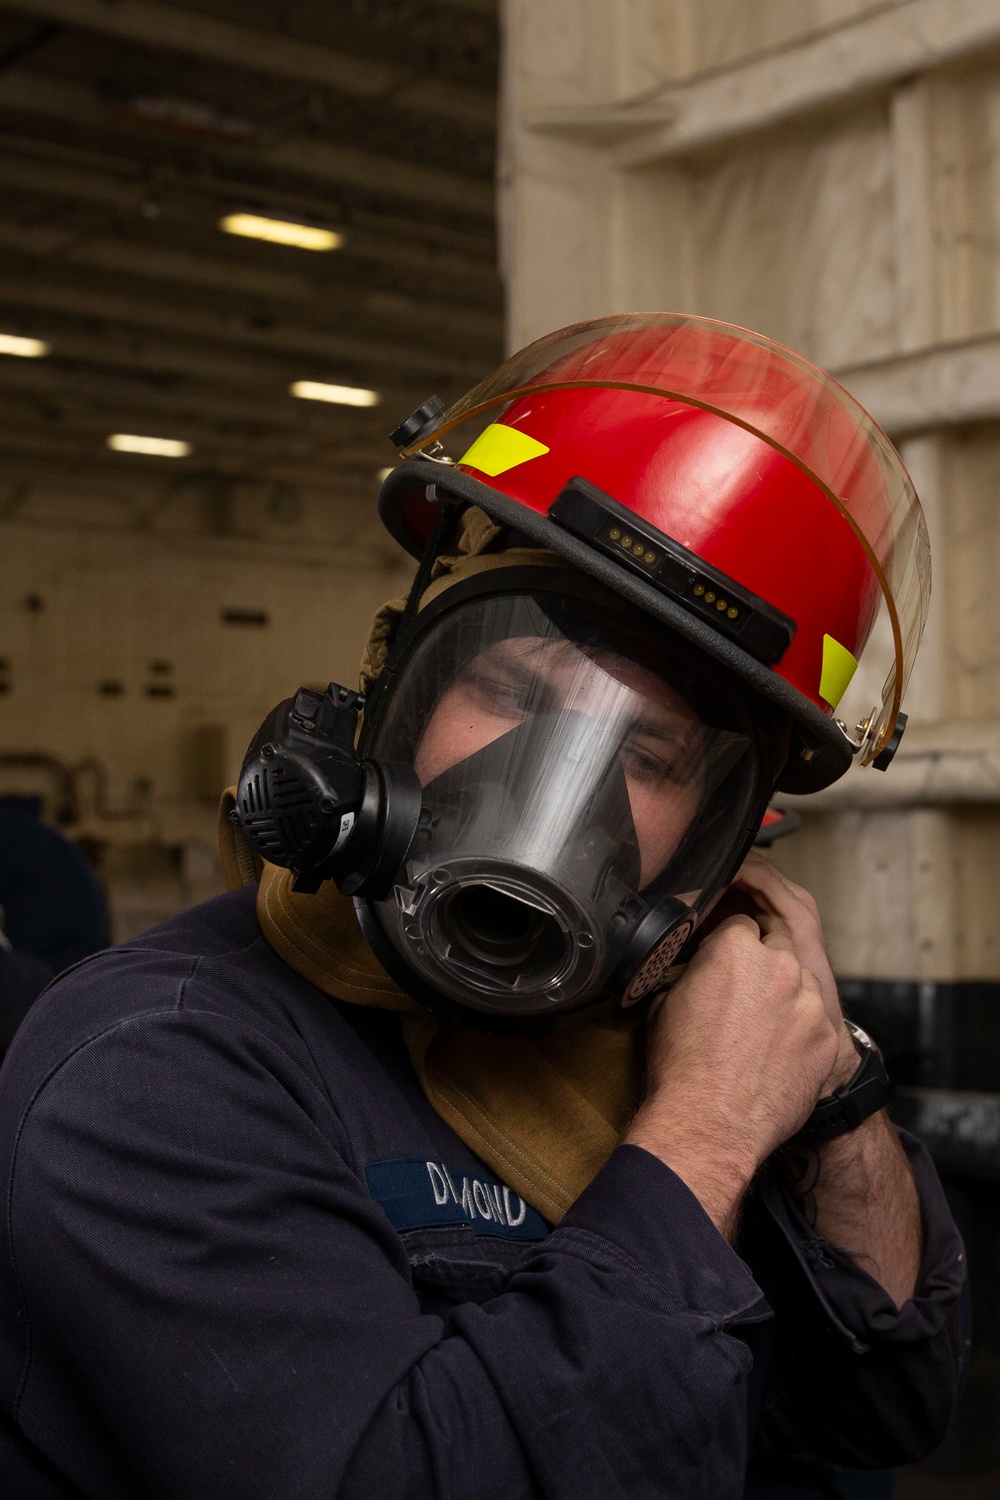 Firefighting Drill